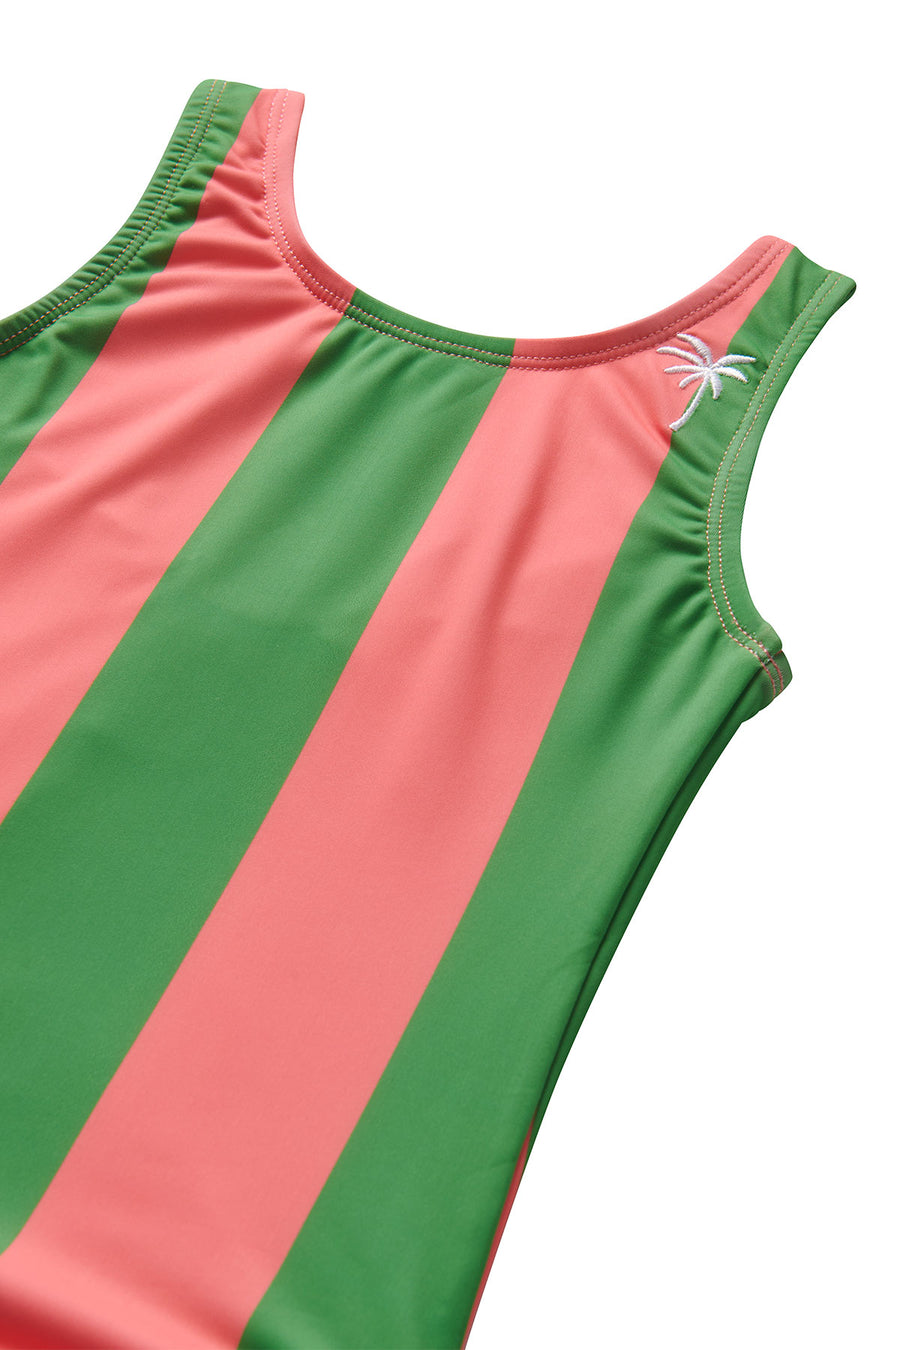 Retro Stripe / Watermelon / Swimsuit